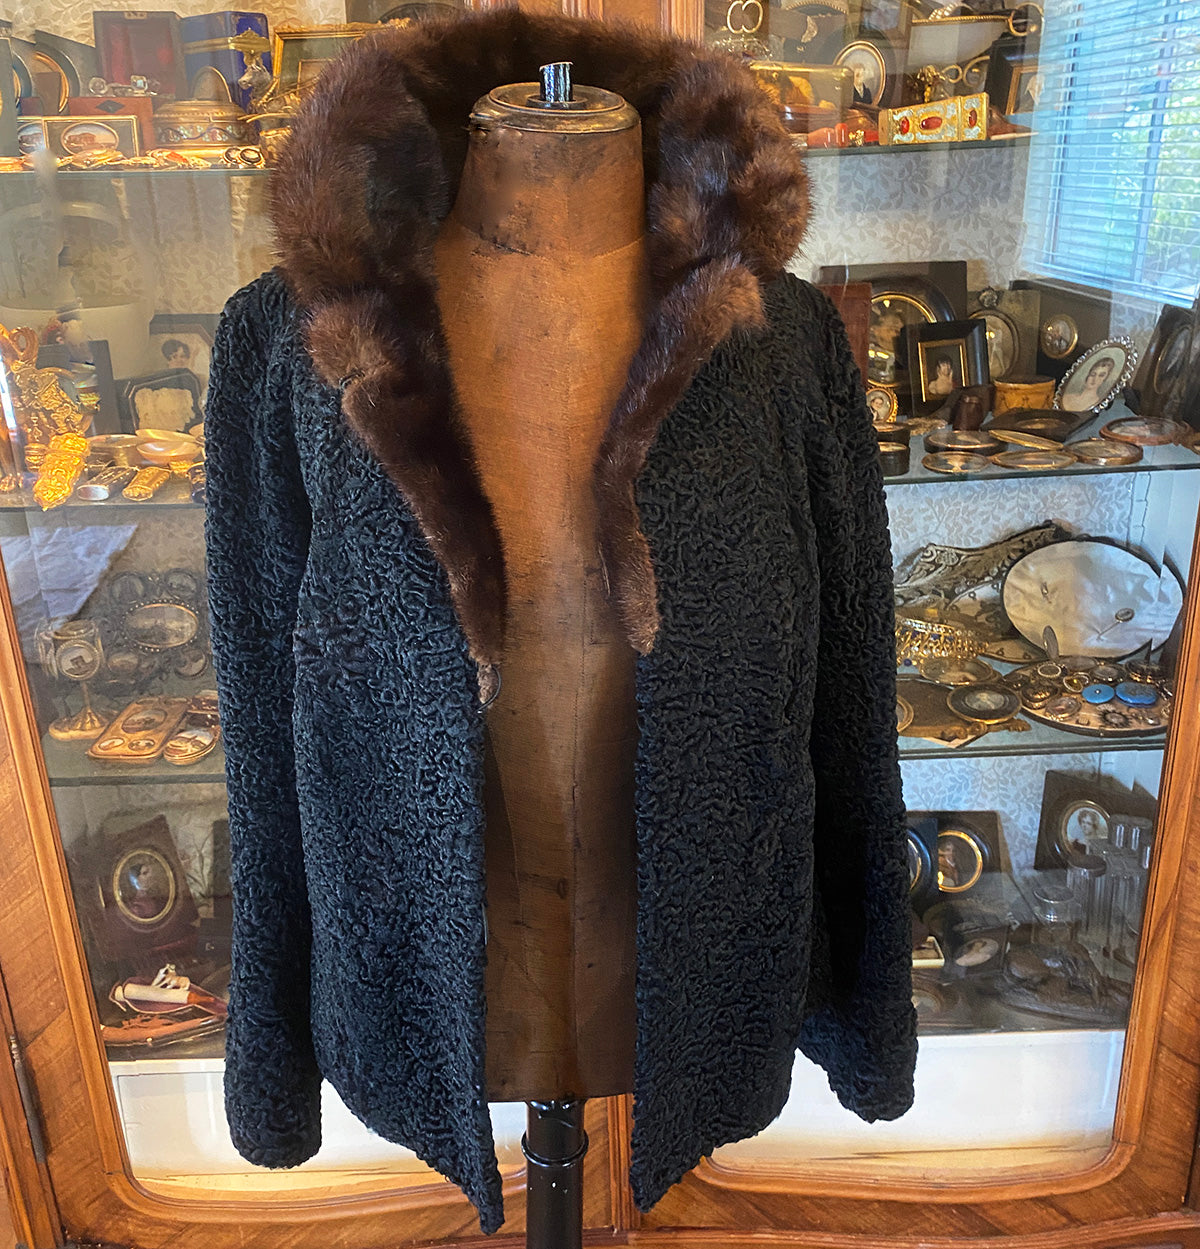 Black Persian Lamb Fur Coat with Pastel Mink Fur Collar - Size S